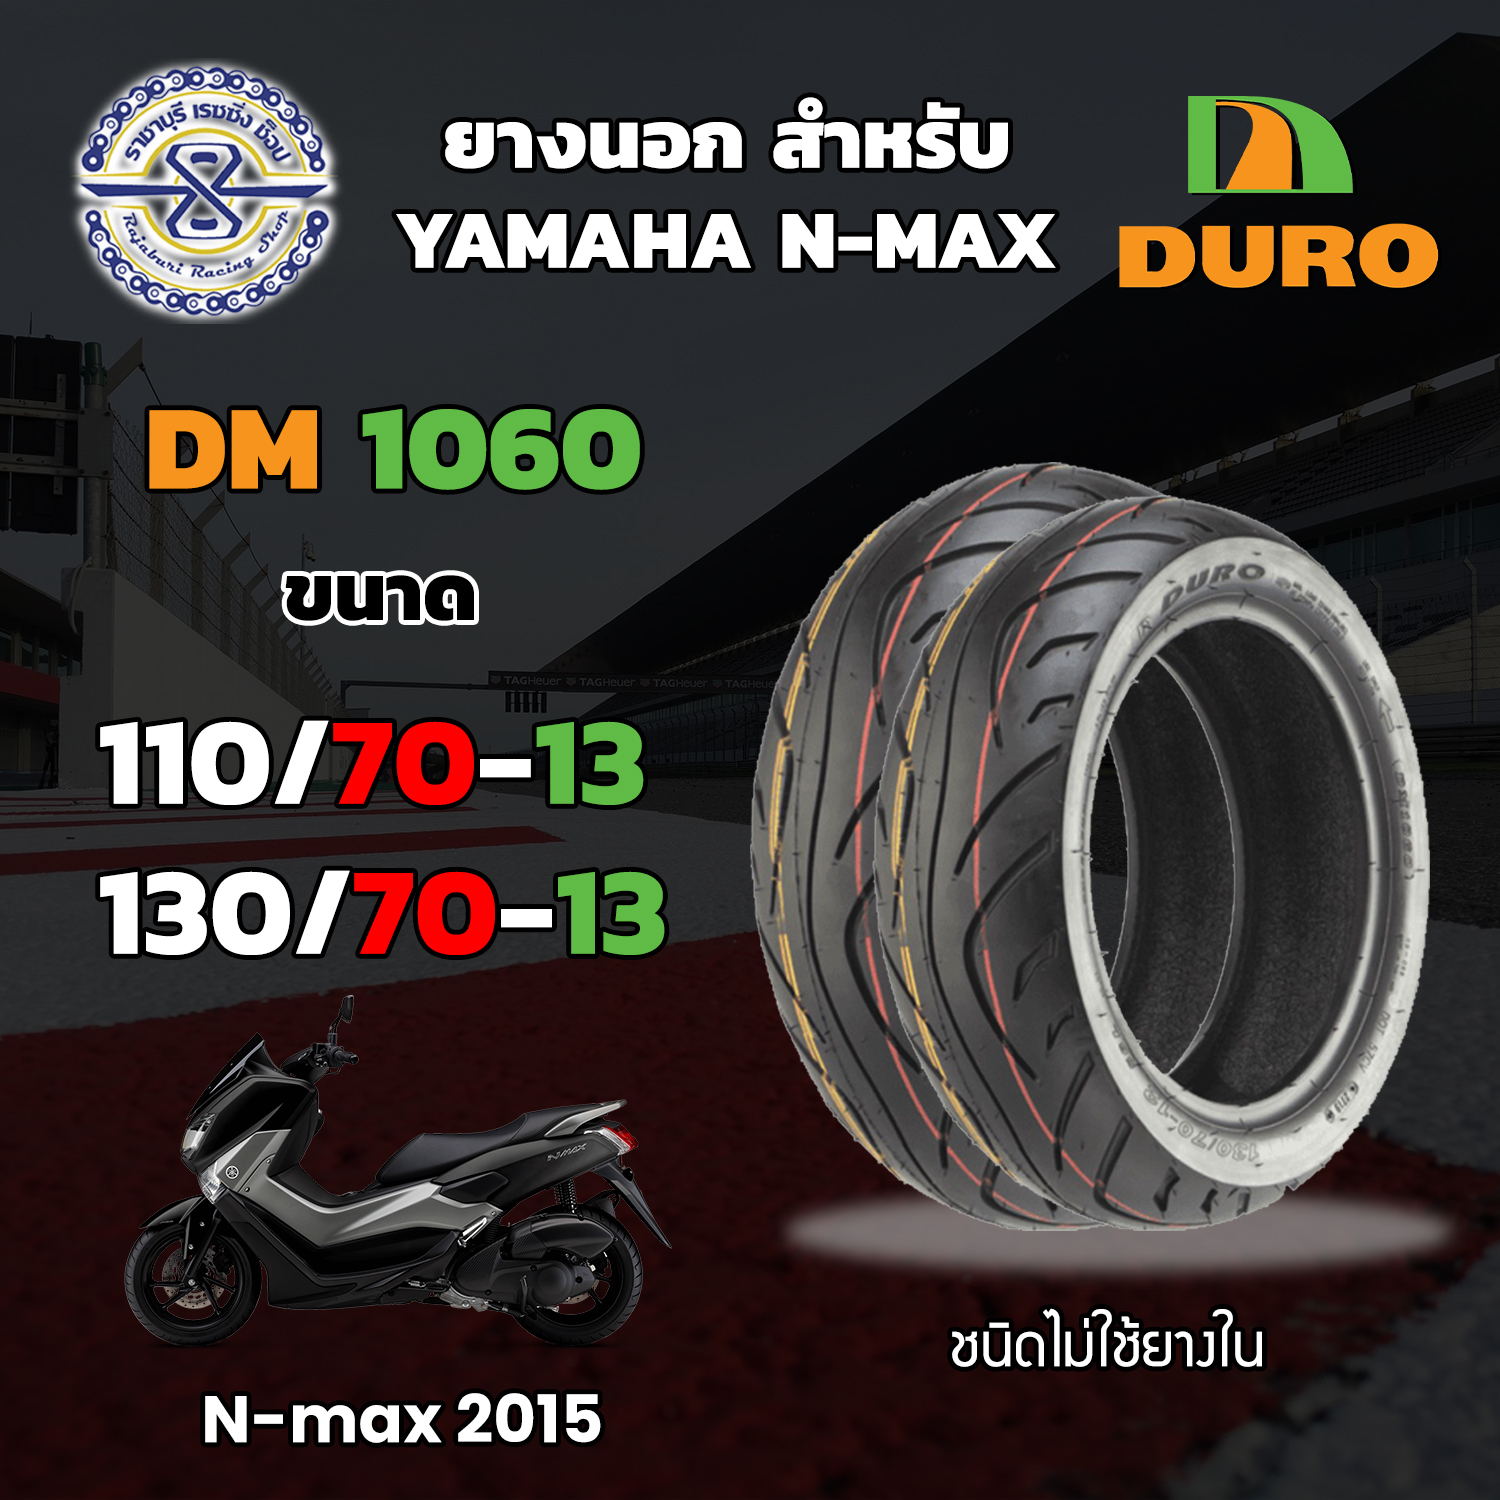 DURO ยางรถมอเตอร์ไซค์  NMAX ชุด 2 เส้น รุ่น DM1060 TL  ชนิดไม่ใช้ยางใน 110/70-13 , 130/70-13